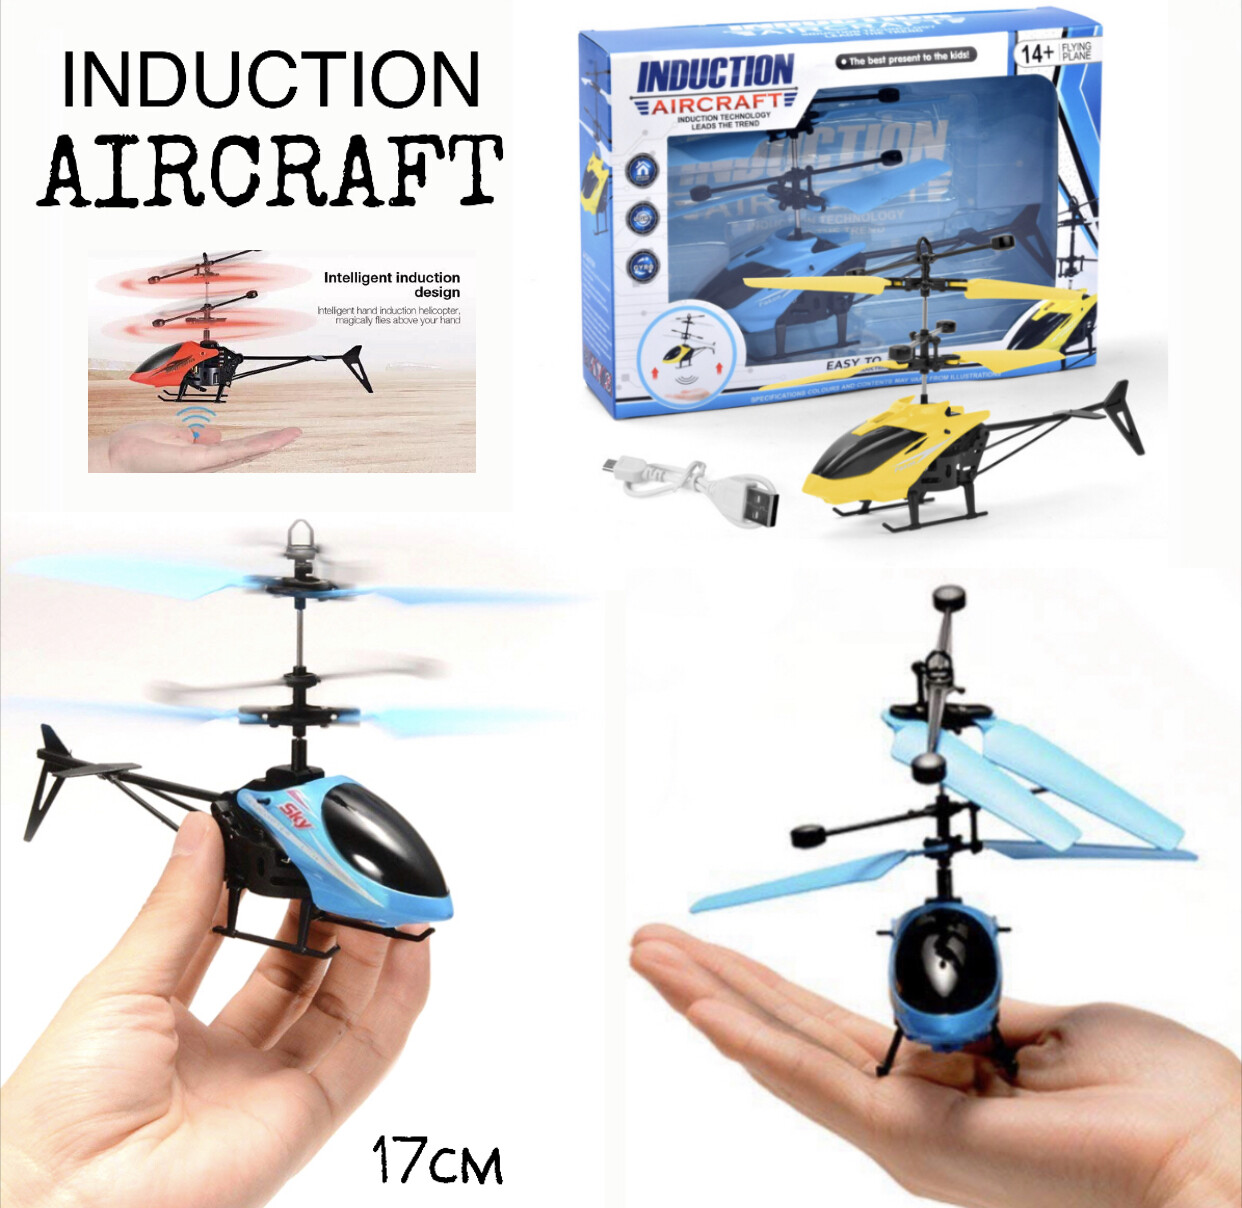 Induction Aircraft